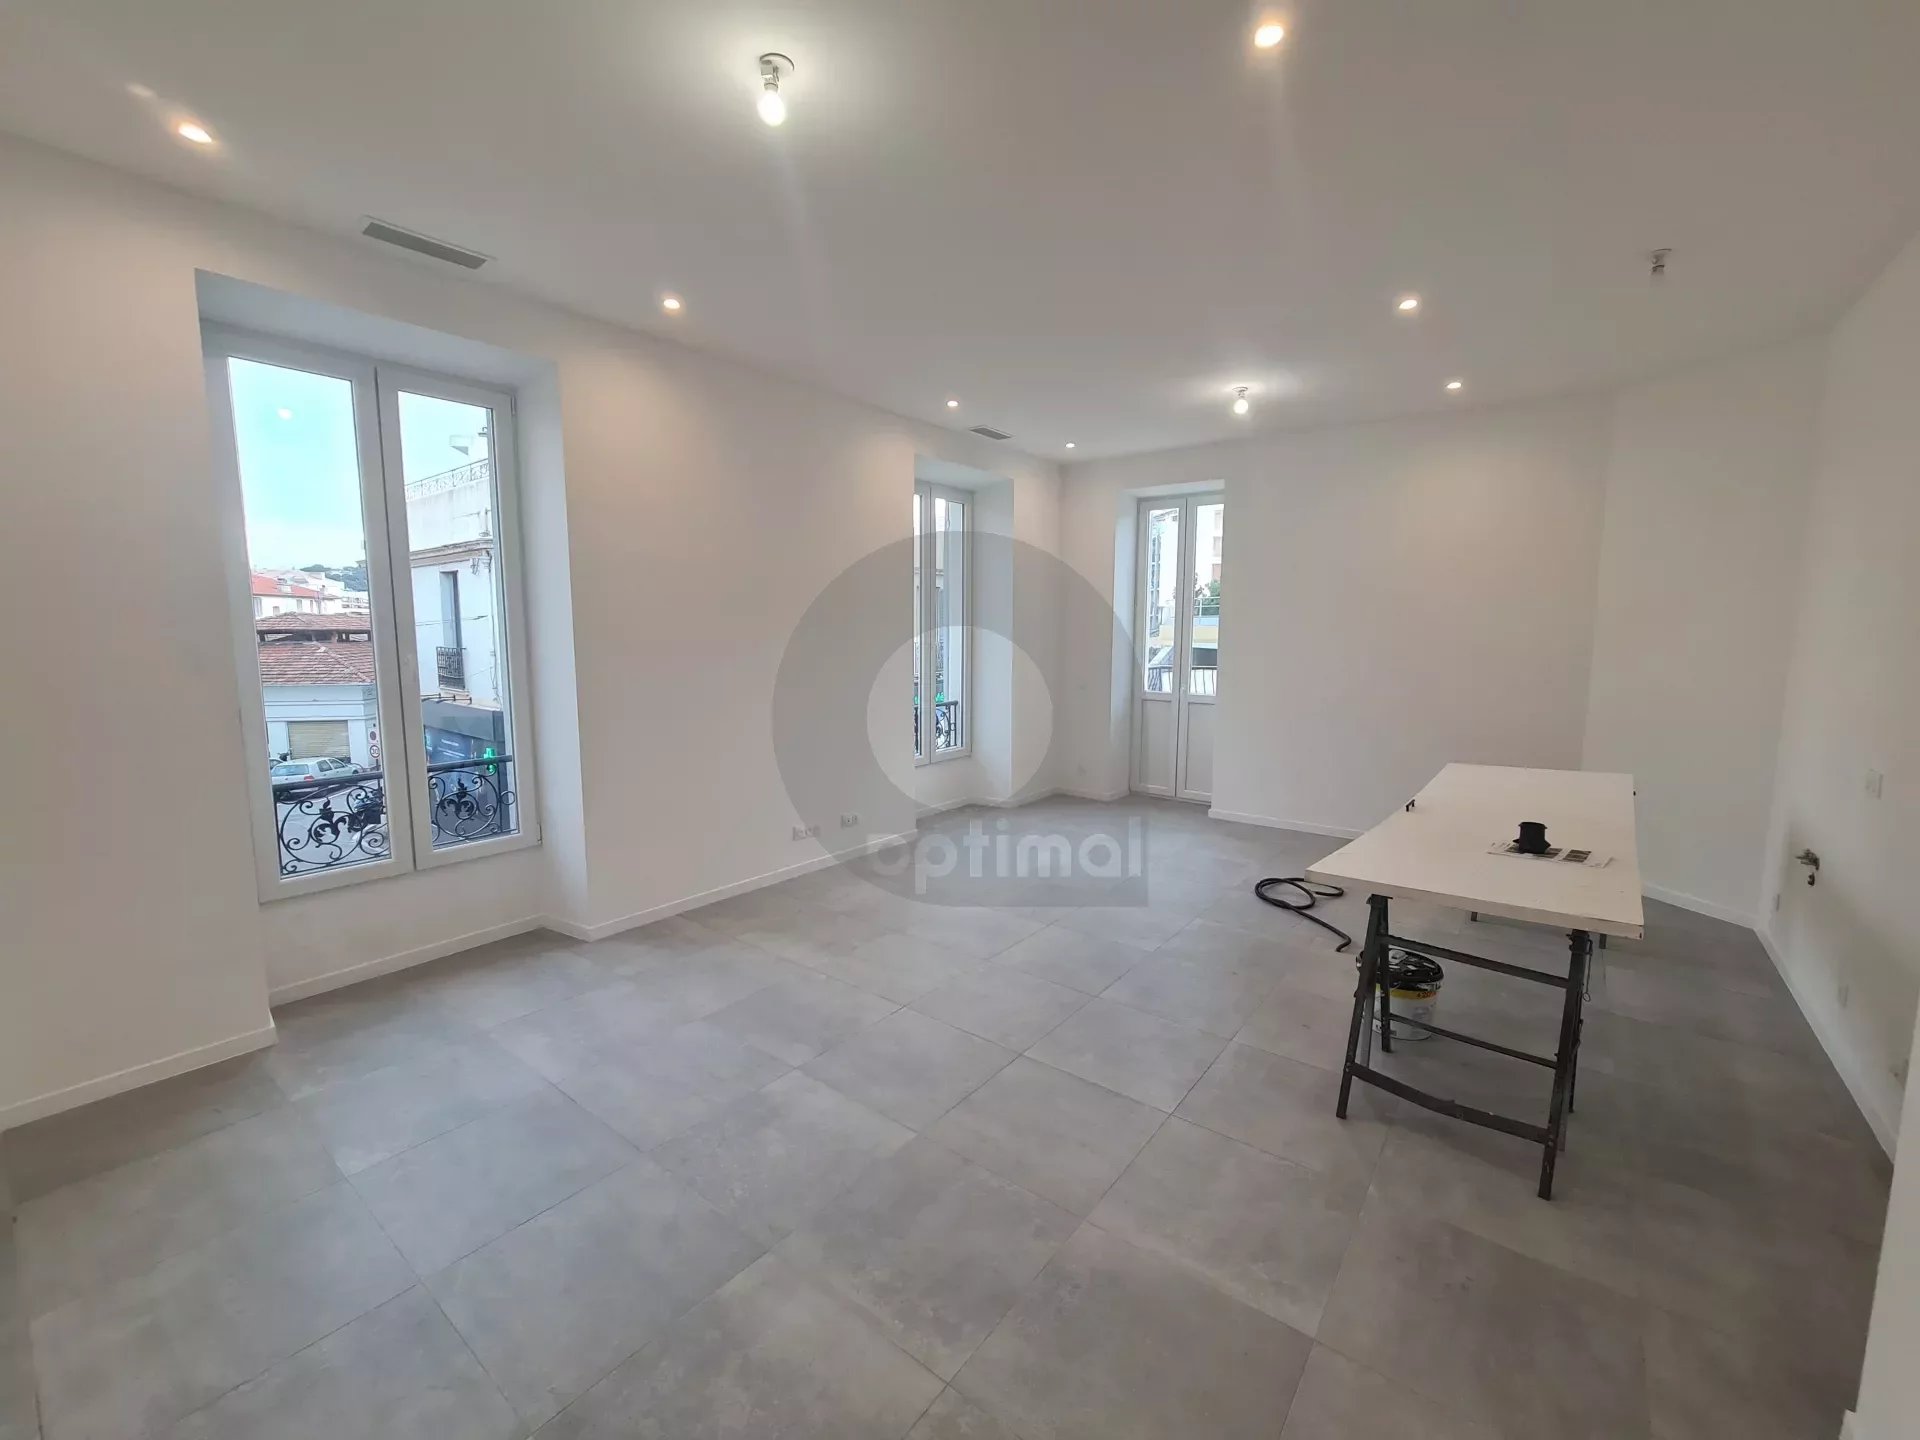 Vente Appartement 67m² 3 Pièces à Roquebrune-Cap-Martin (06190) - Dynamic-Immo